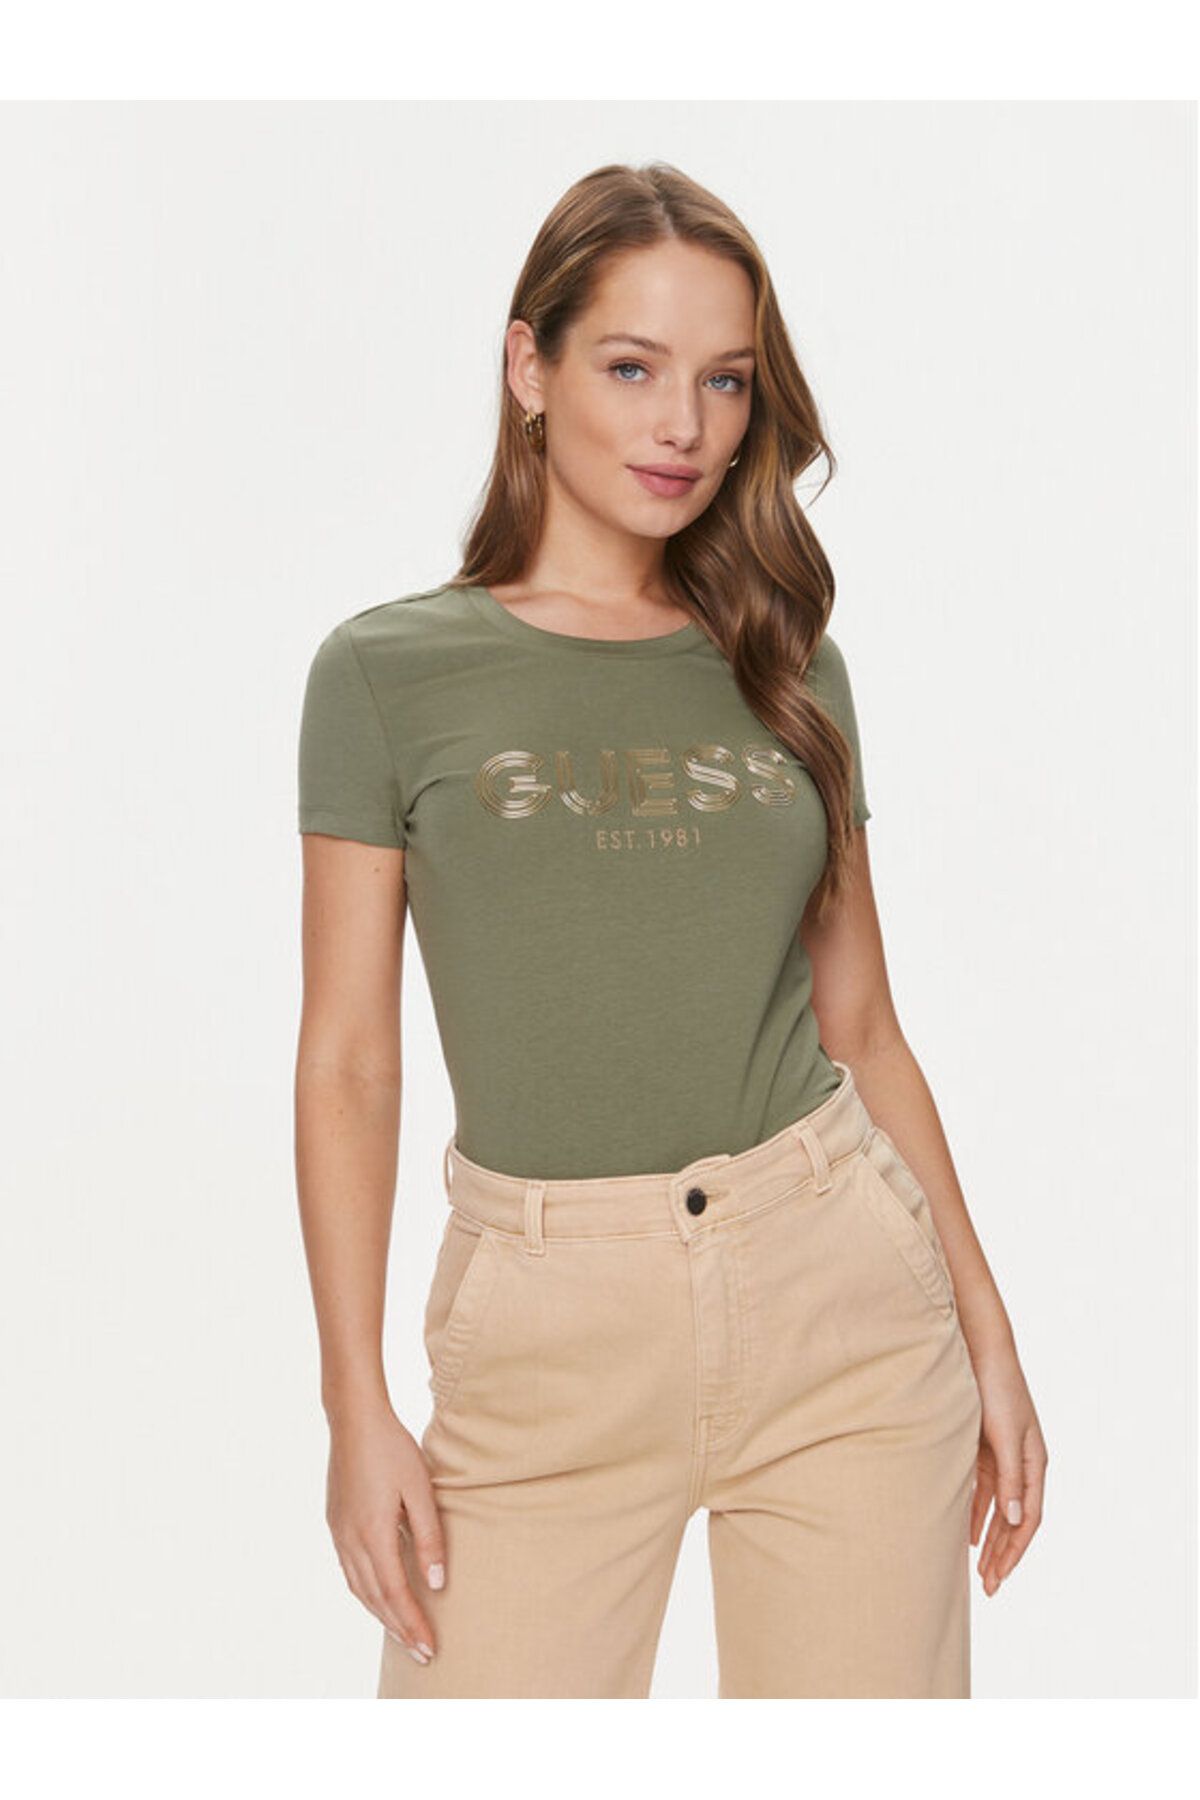 Guess Bold Kadın Slim Fit T-Shirt